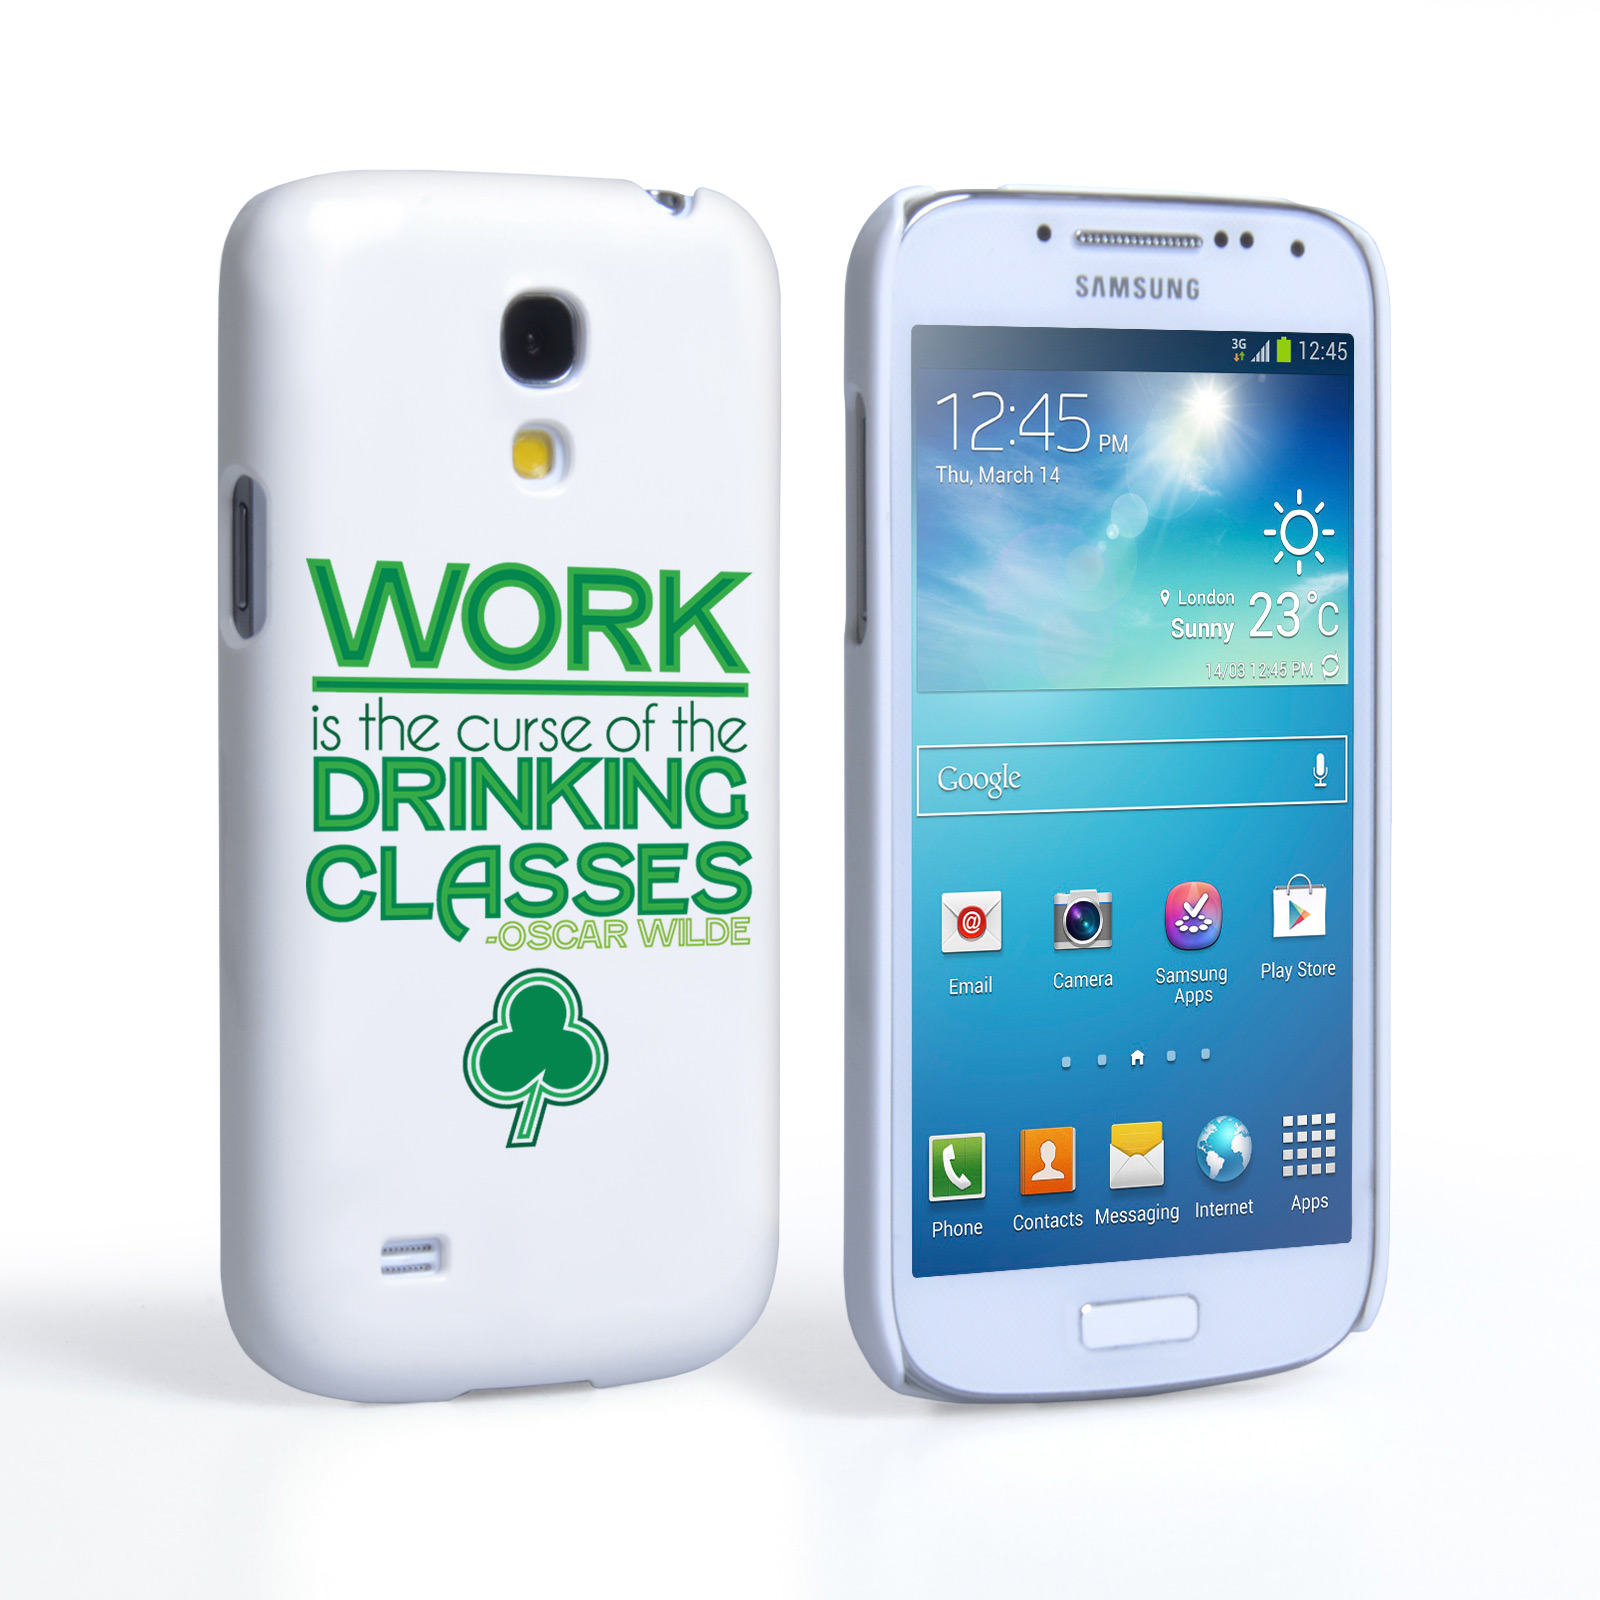 Caseflex Samsung Galaxy S4 Mini Wilde Drinking Classes Quote Hard Case – White and Green